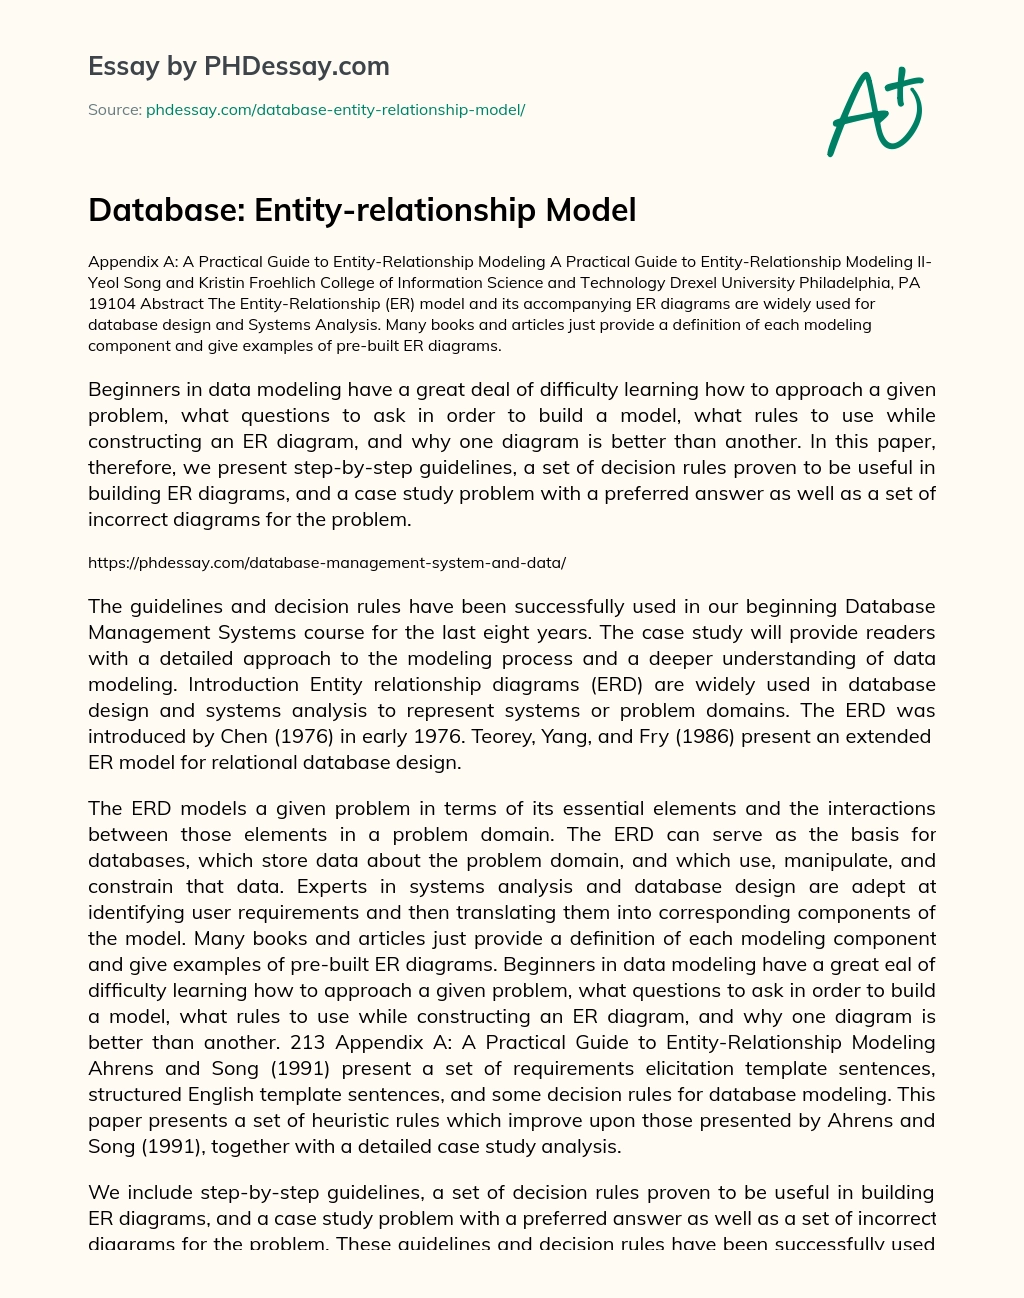 Database: Entity-relationship Model essay